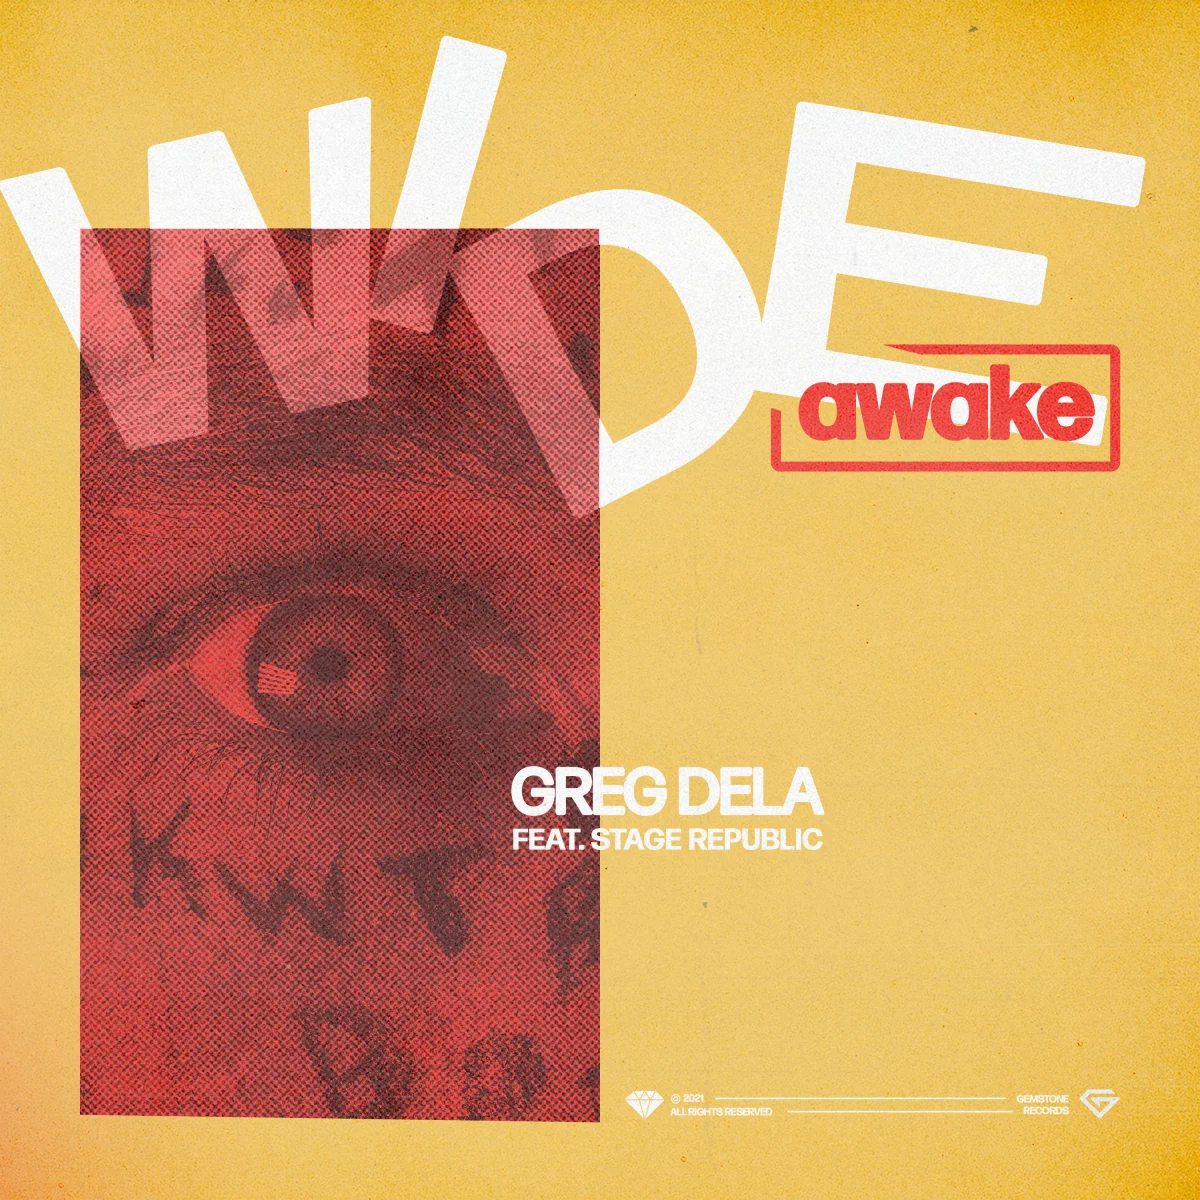 Wide Awake - Greg Dela⁠ feat. Stage Republic⁠